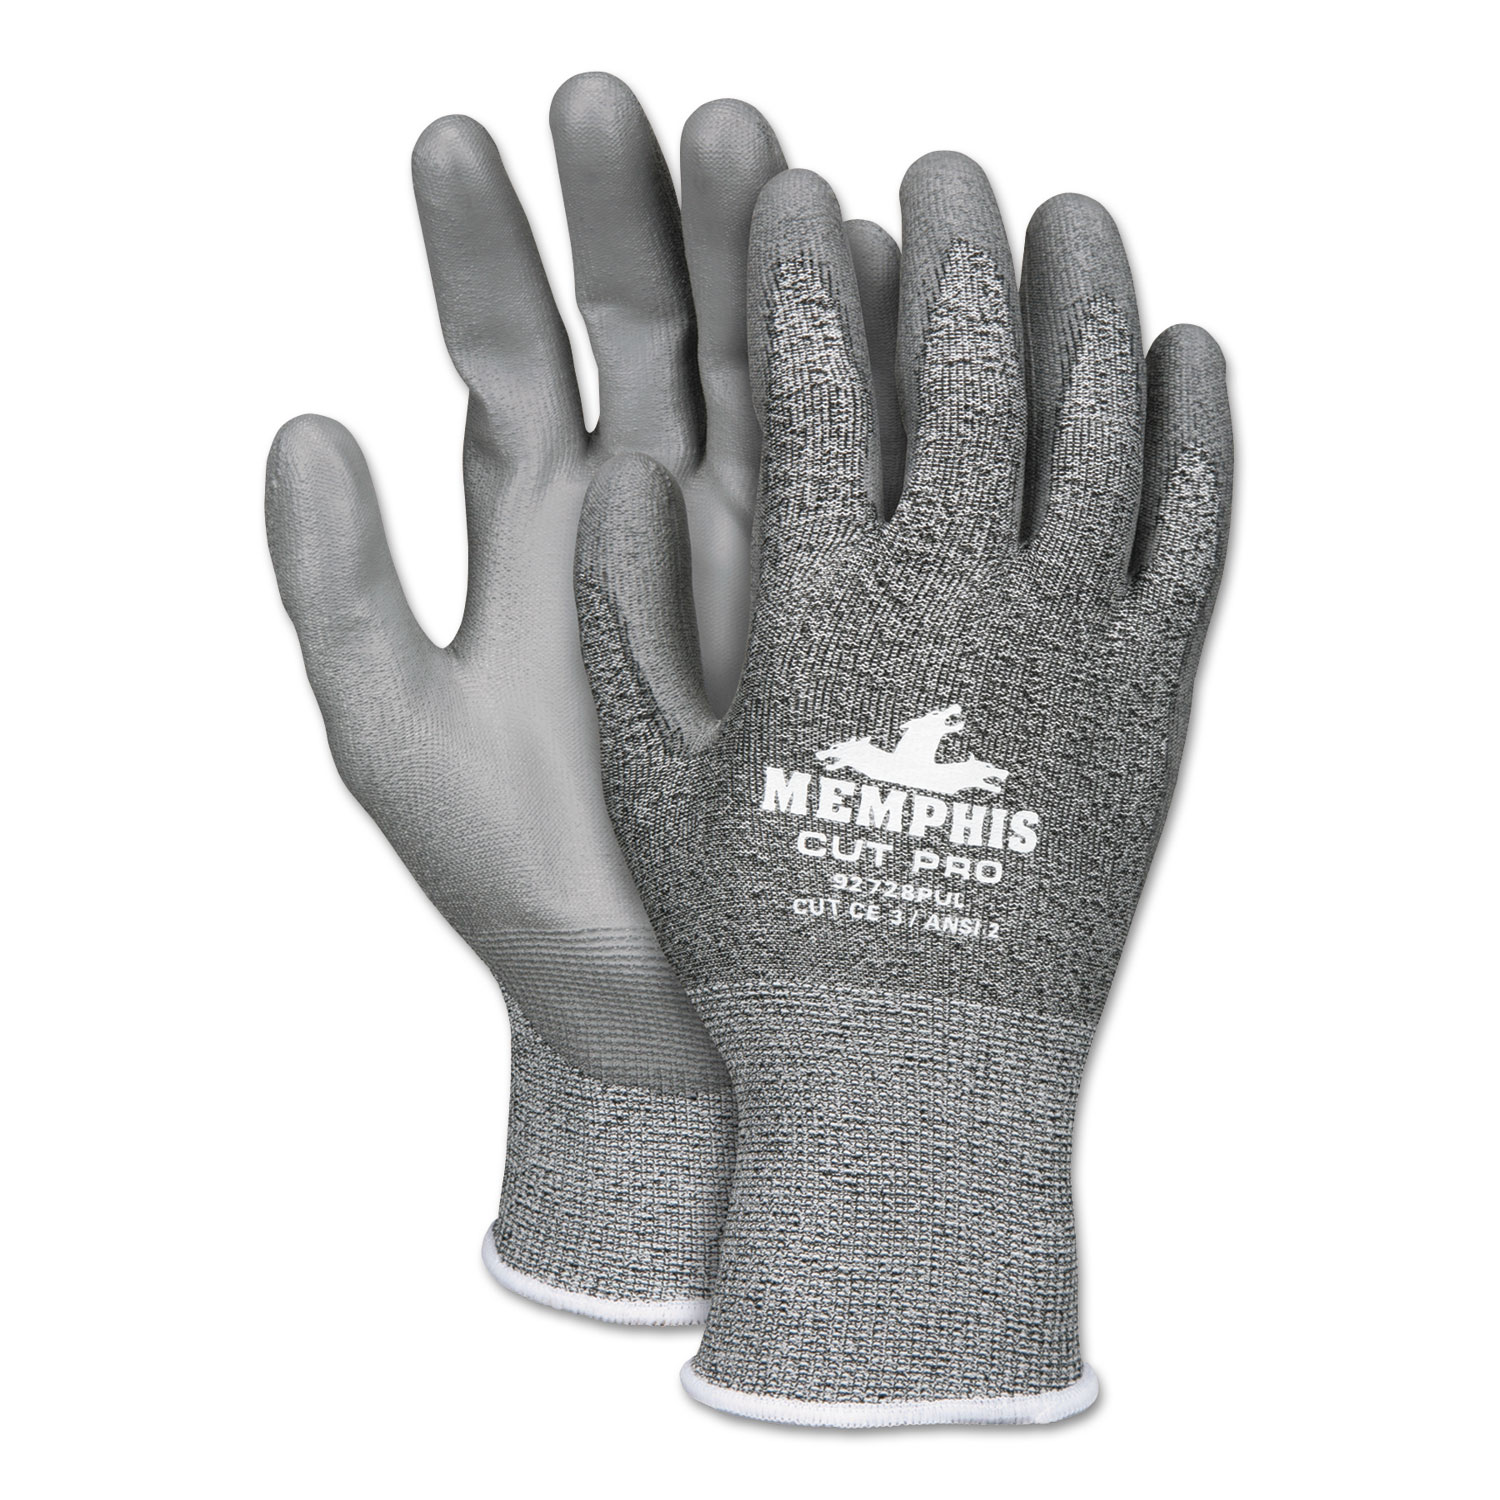  MCR Safety 92728PUXL Memphis Cut Pro 92728PU Glove, Black/White/Gray, X-Large, Dozen (CRW92728PUXL) 